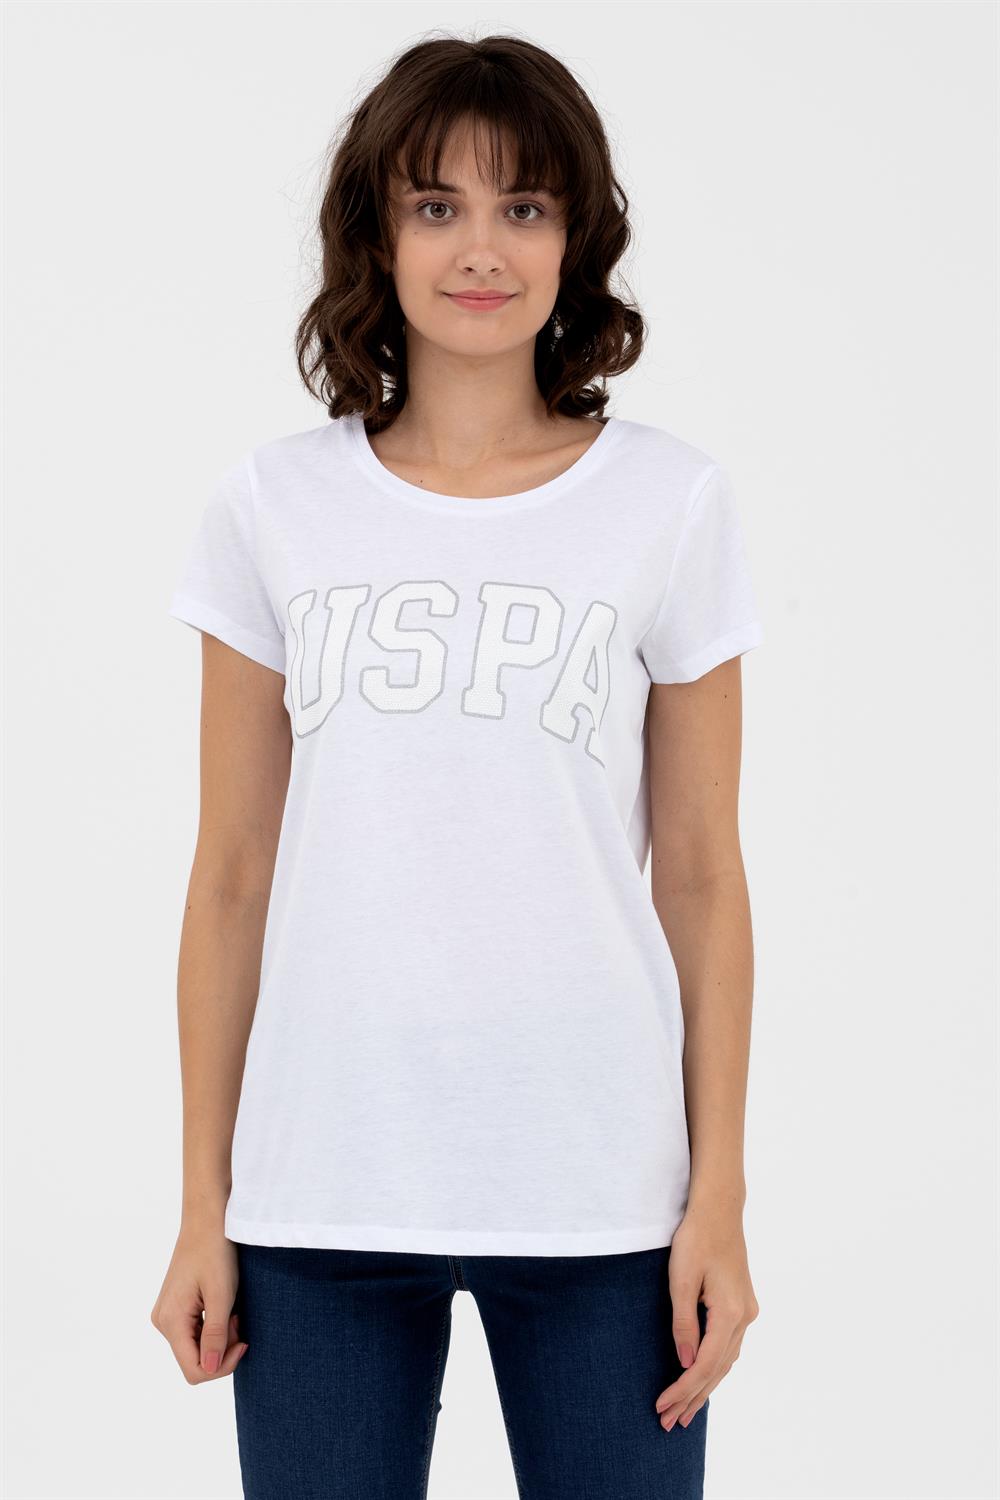 U.S.Polo Assn Kadın GEAN23 USPA Baskılı Tshirt 1567304